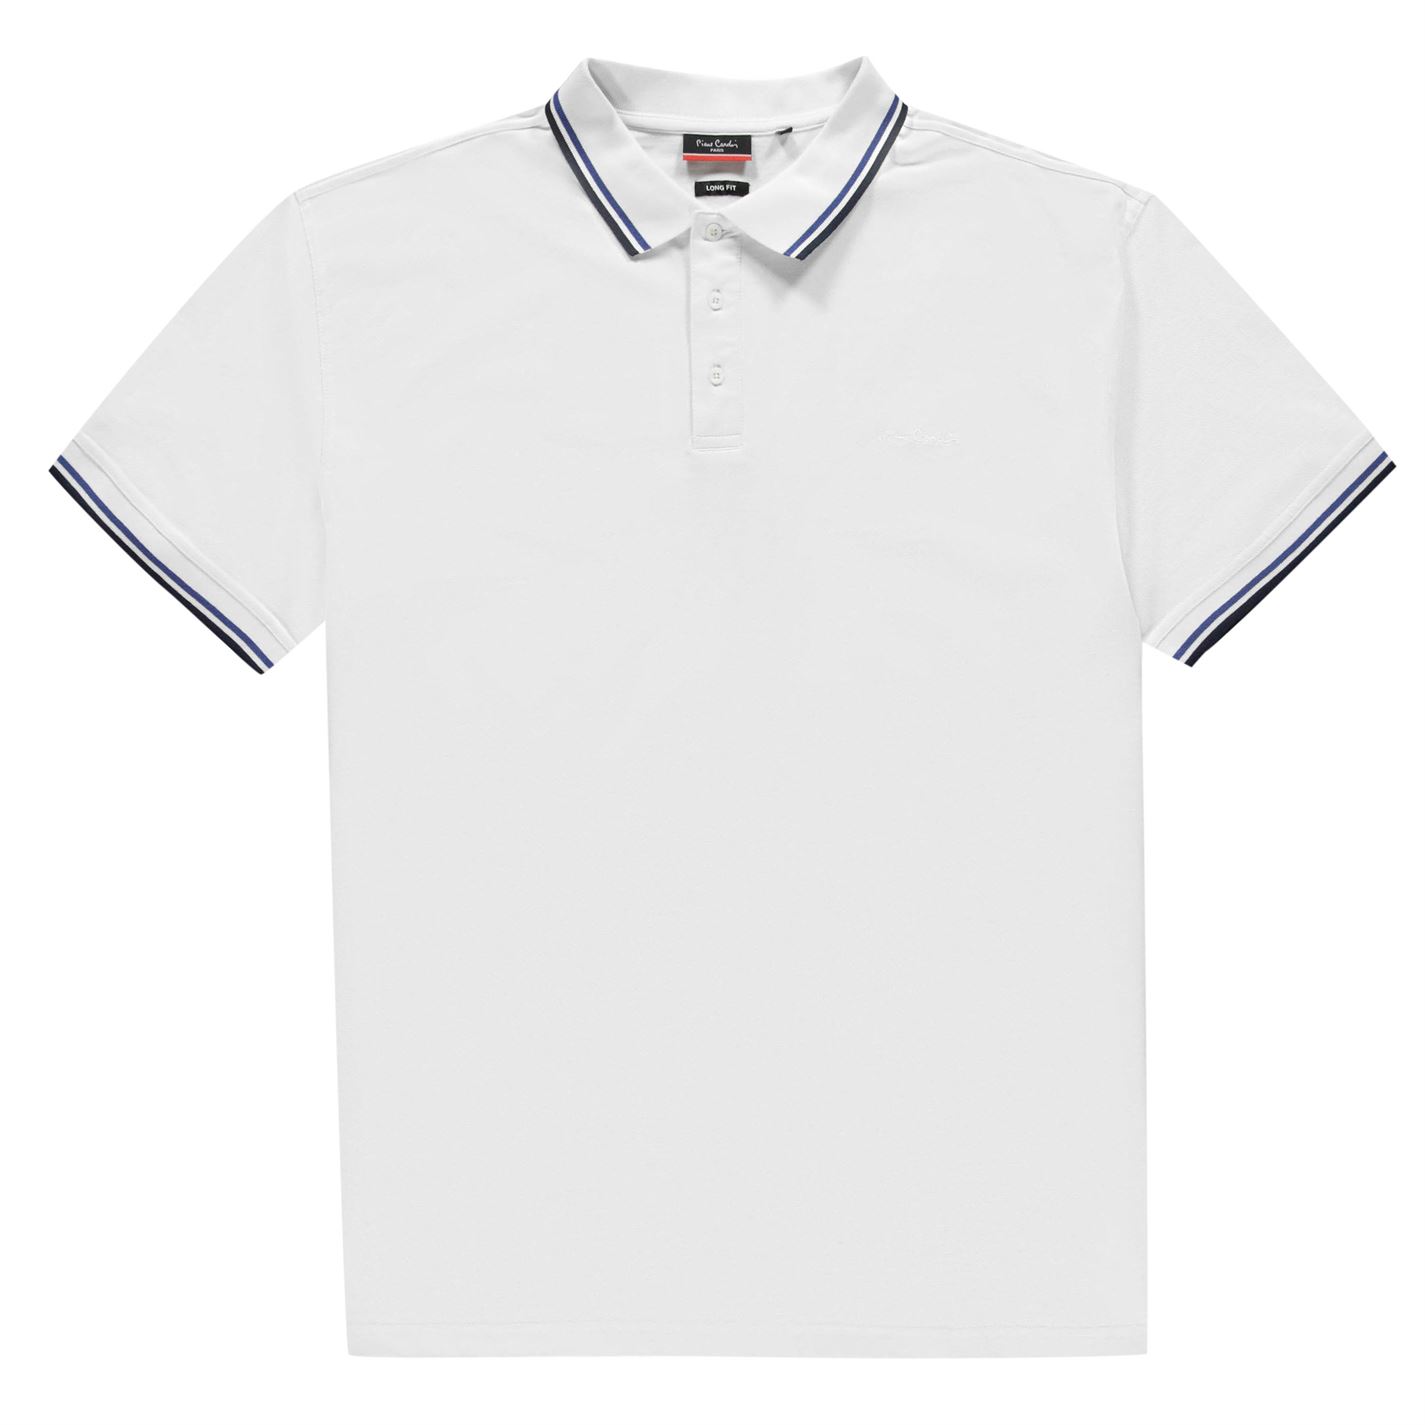 XL Tipped Polo Shirt Mens 3 button placketShort sleeves